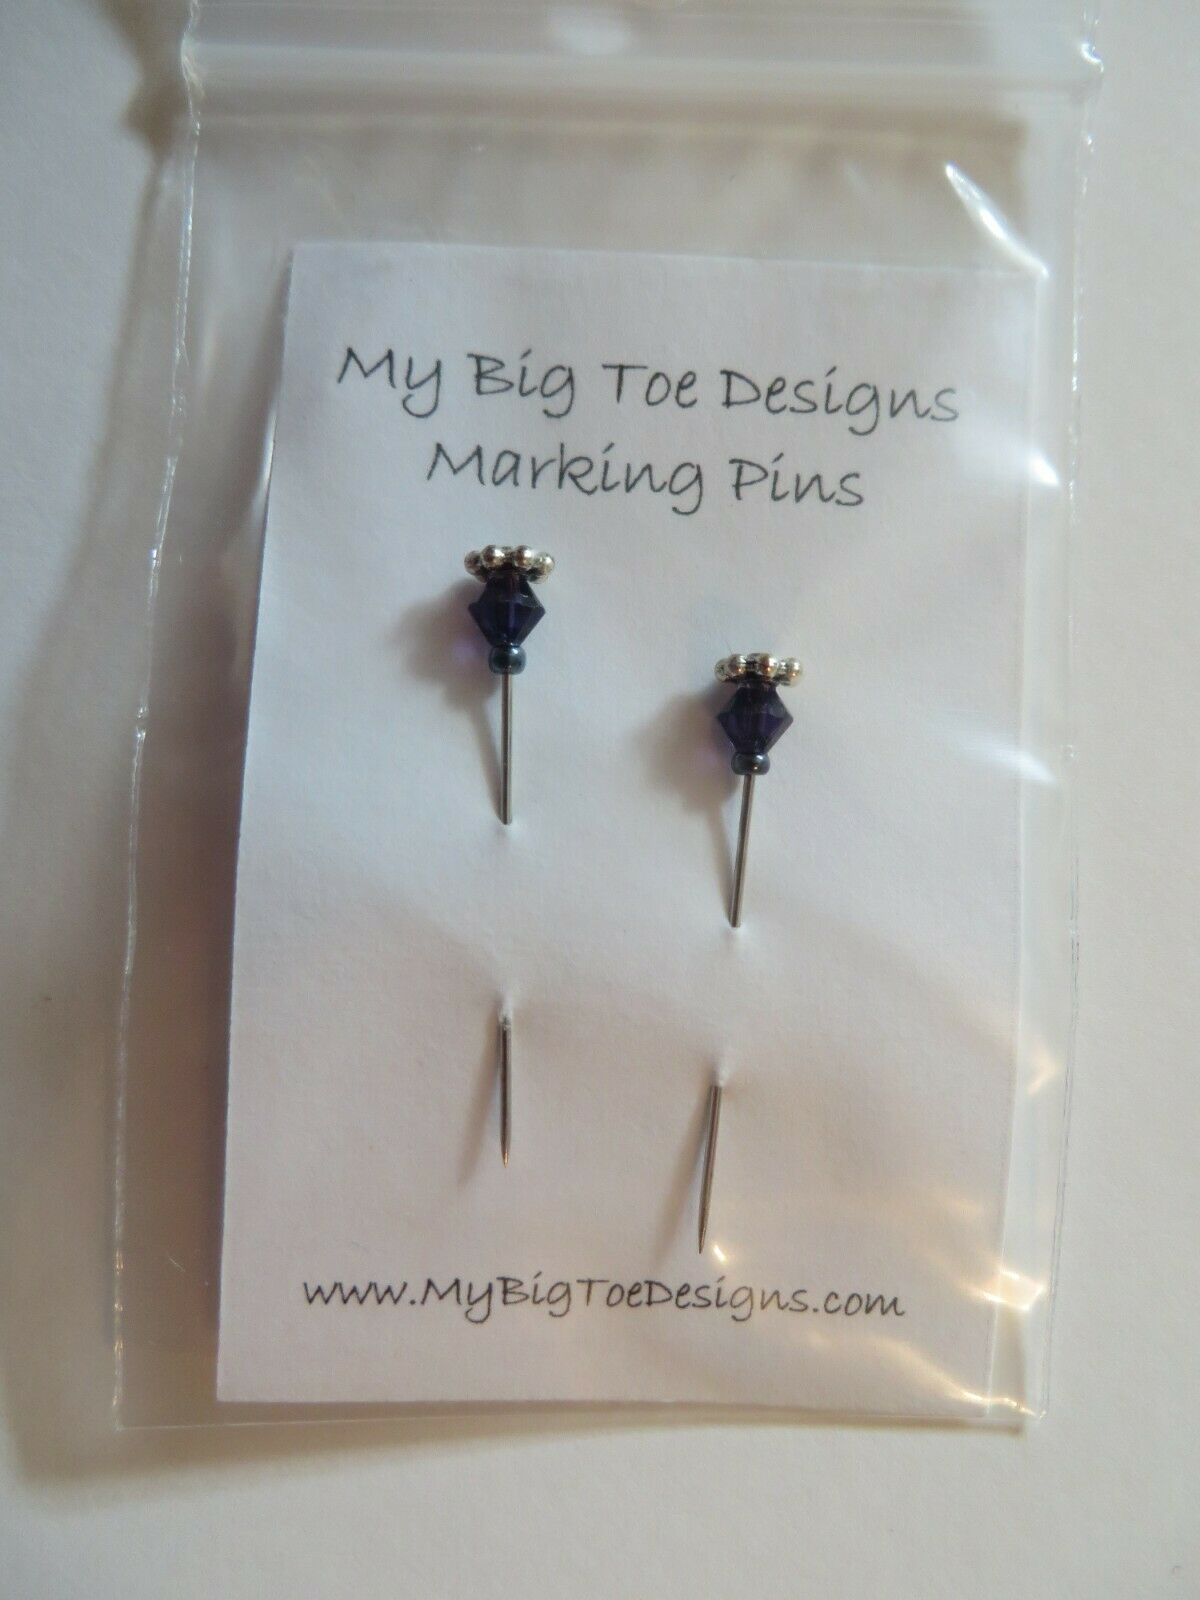 My Big Toe Designs - Decorative Marking Pins Mp03